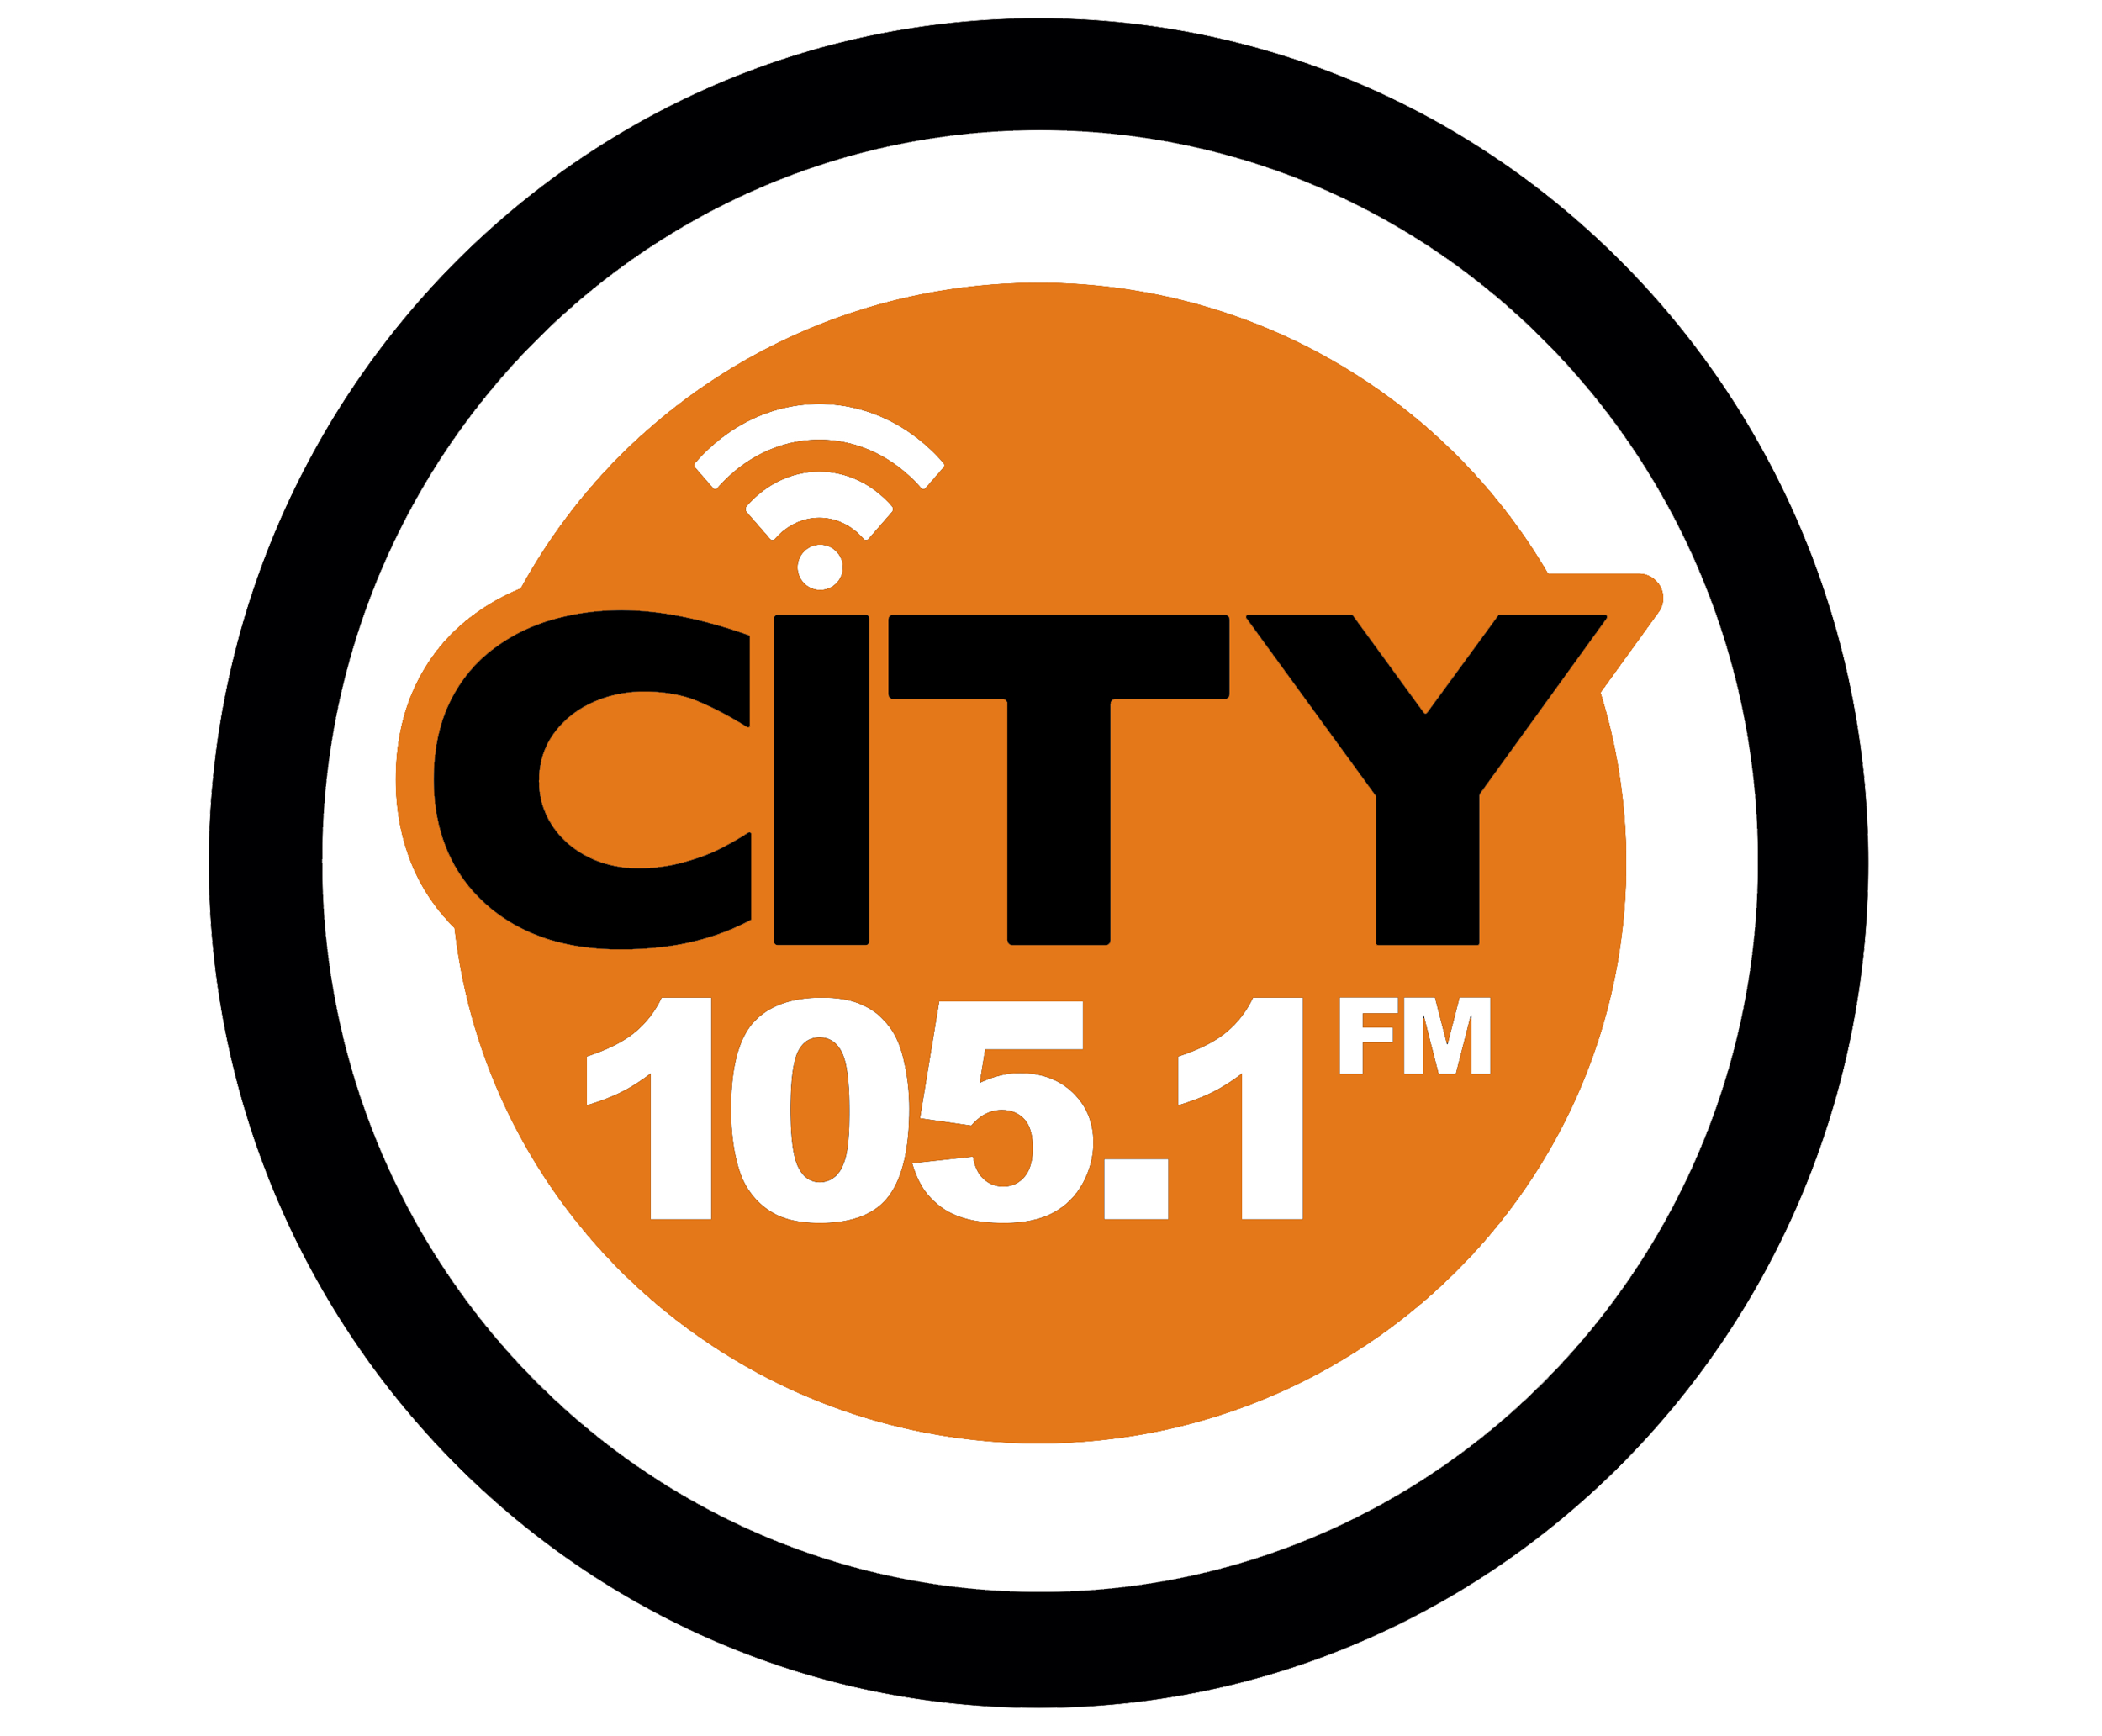 City fm logo